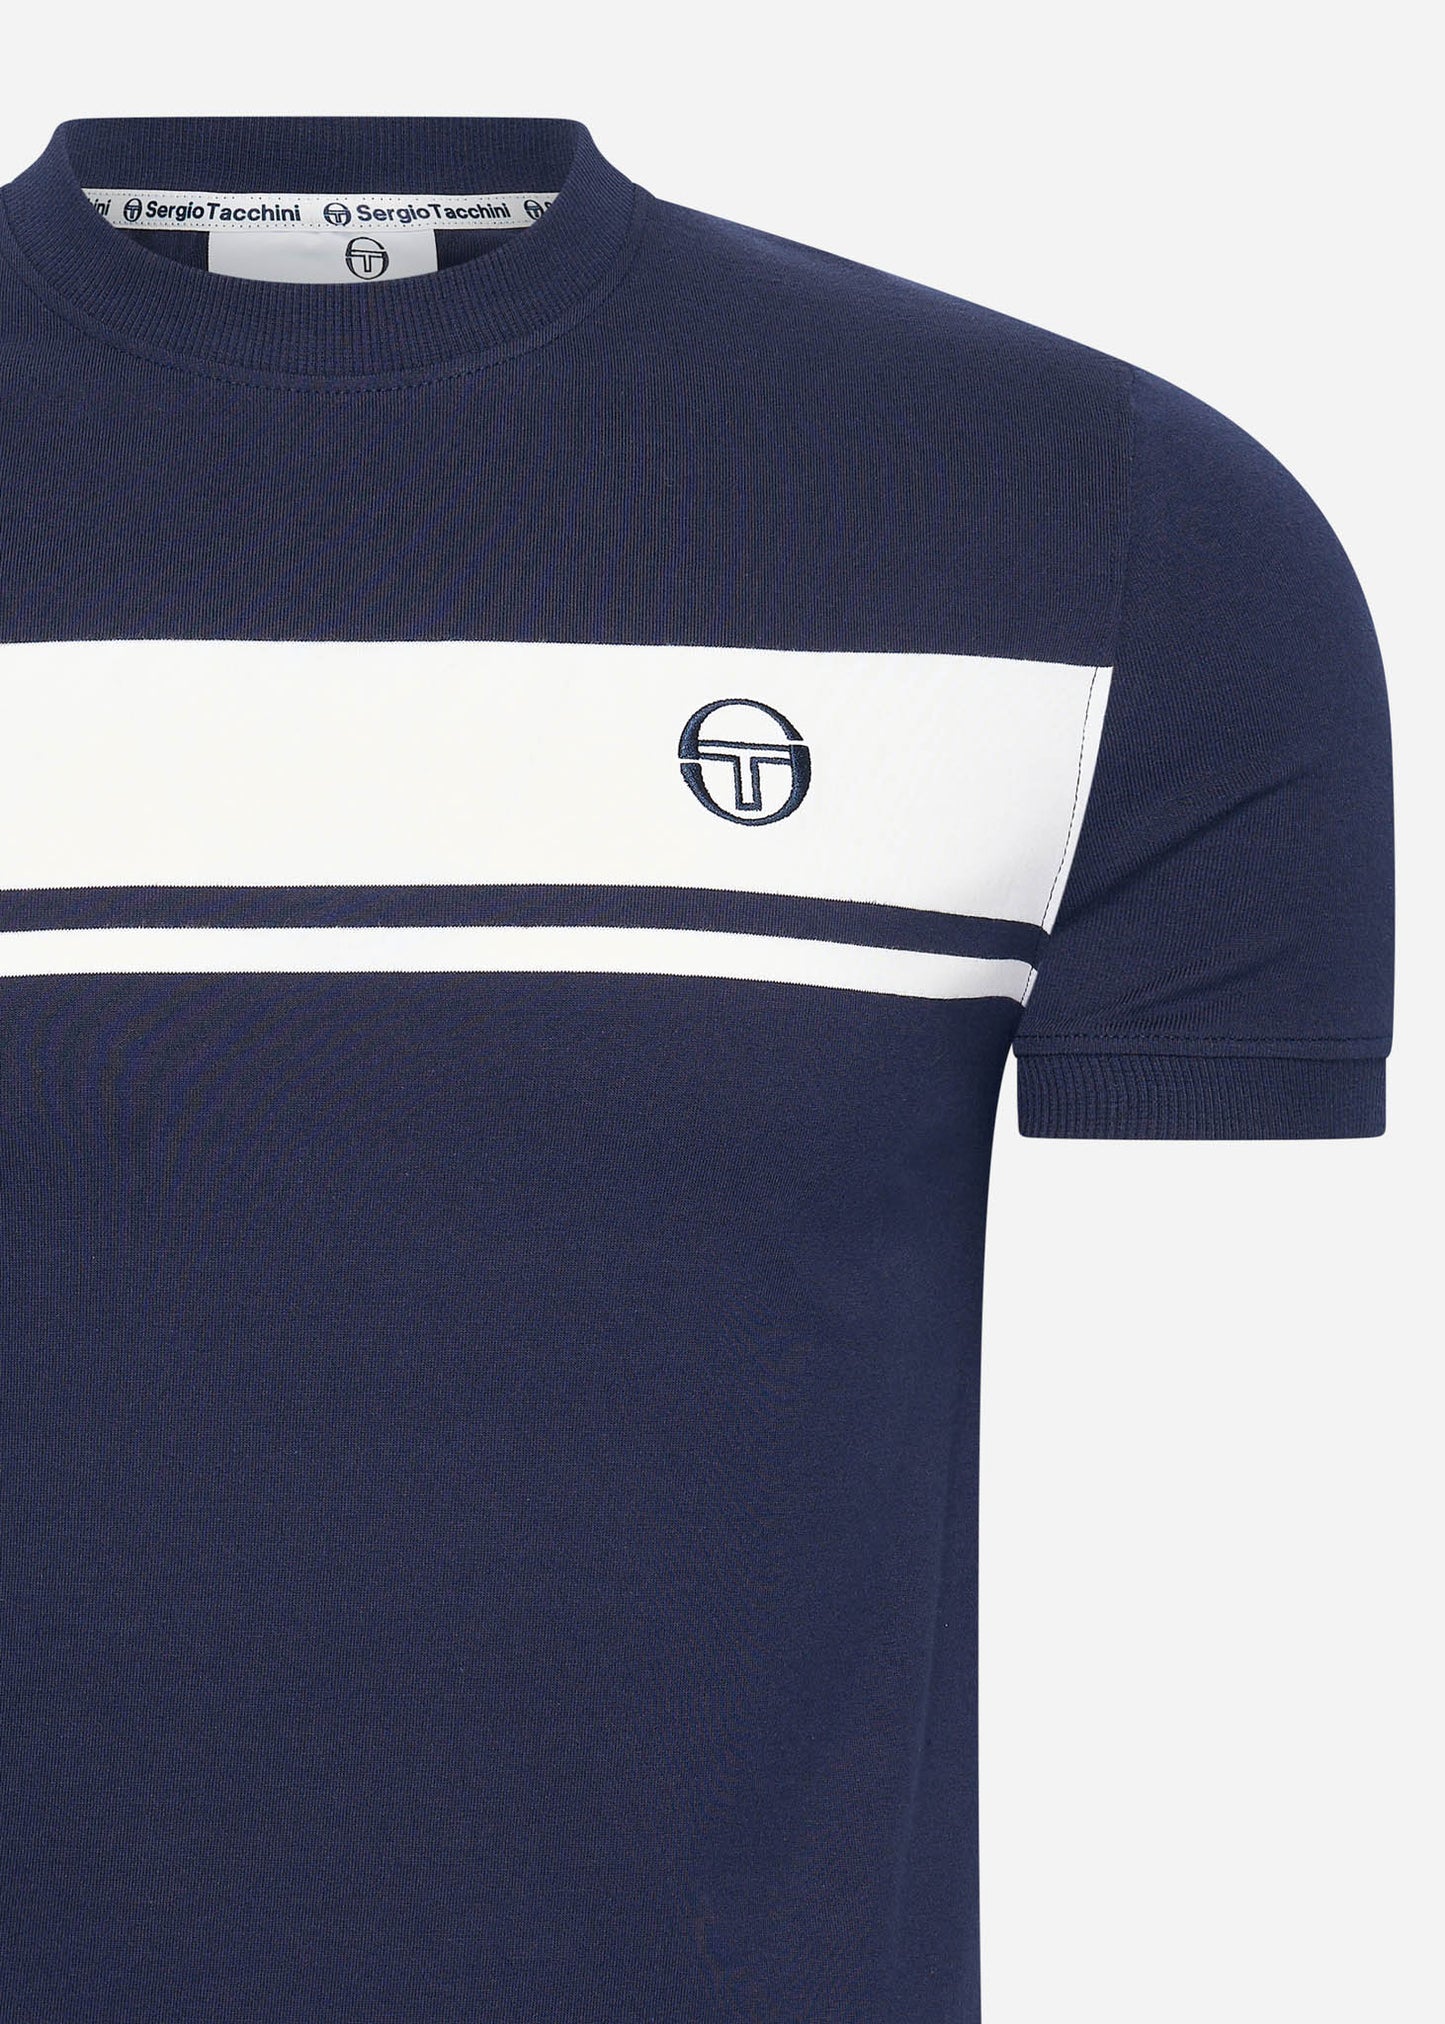 Sergio Tacchini T-shirts  Master tee - blue white 